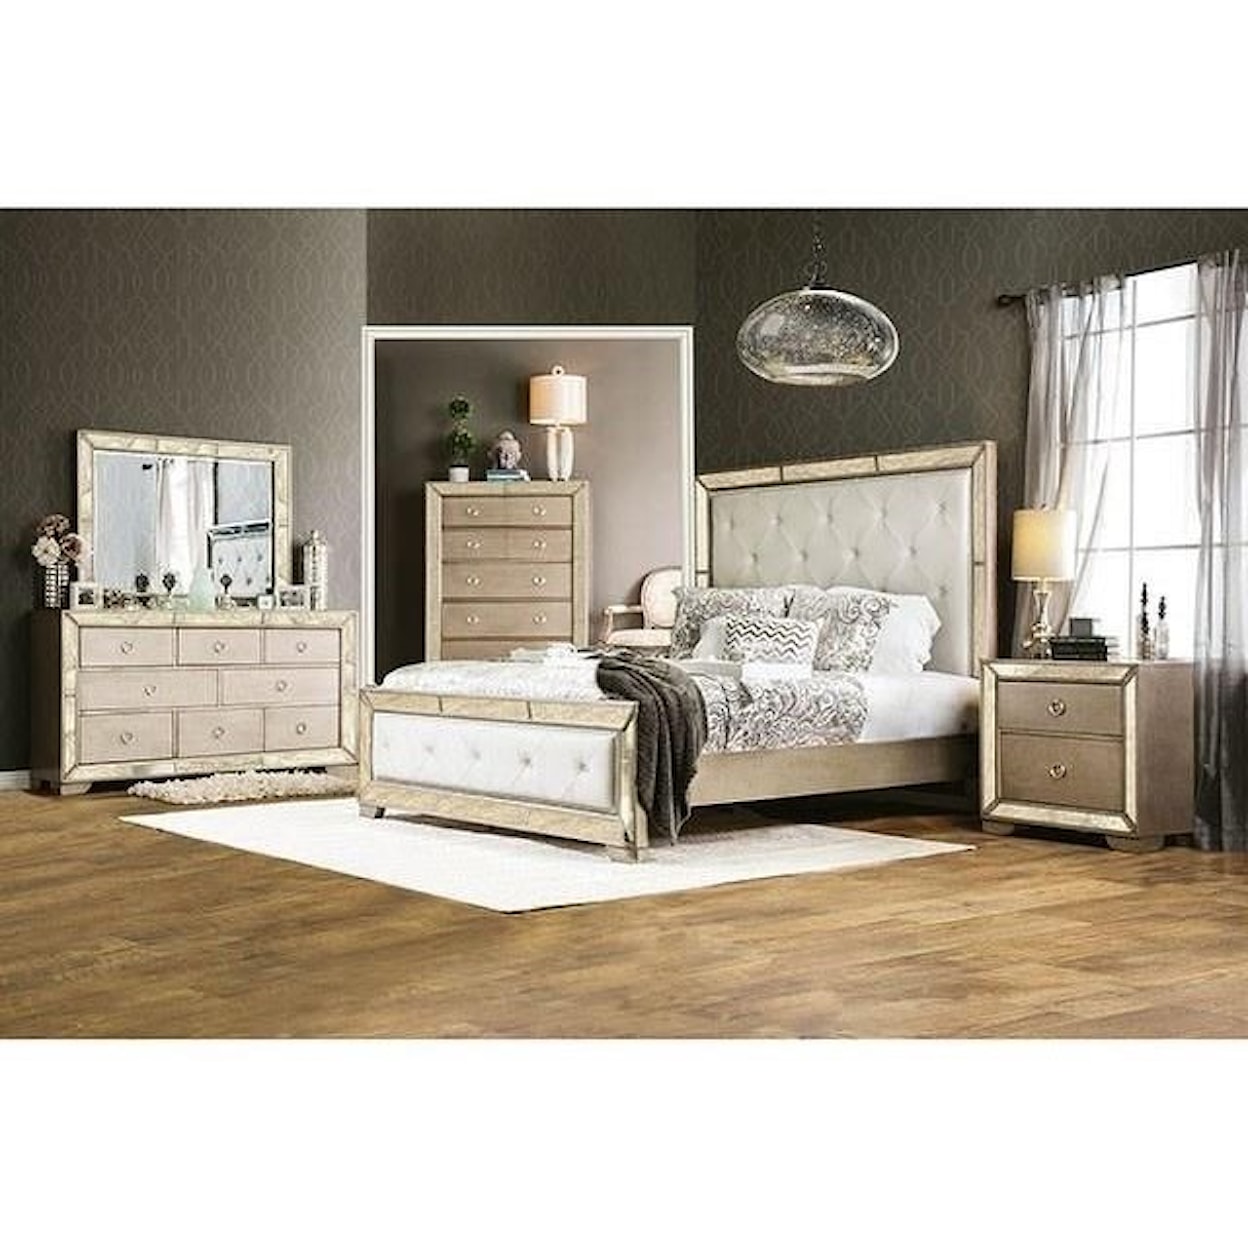 Furniture of America Loraine California King Bed